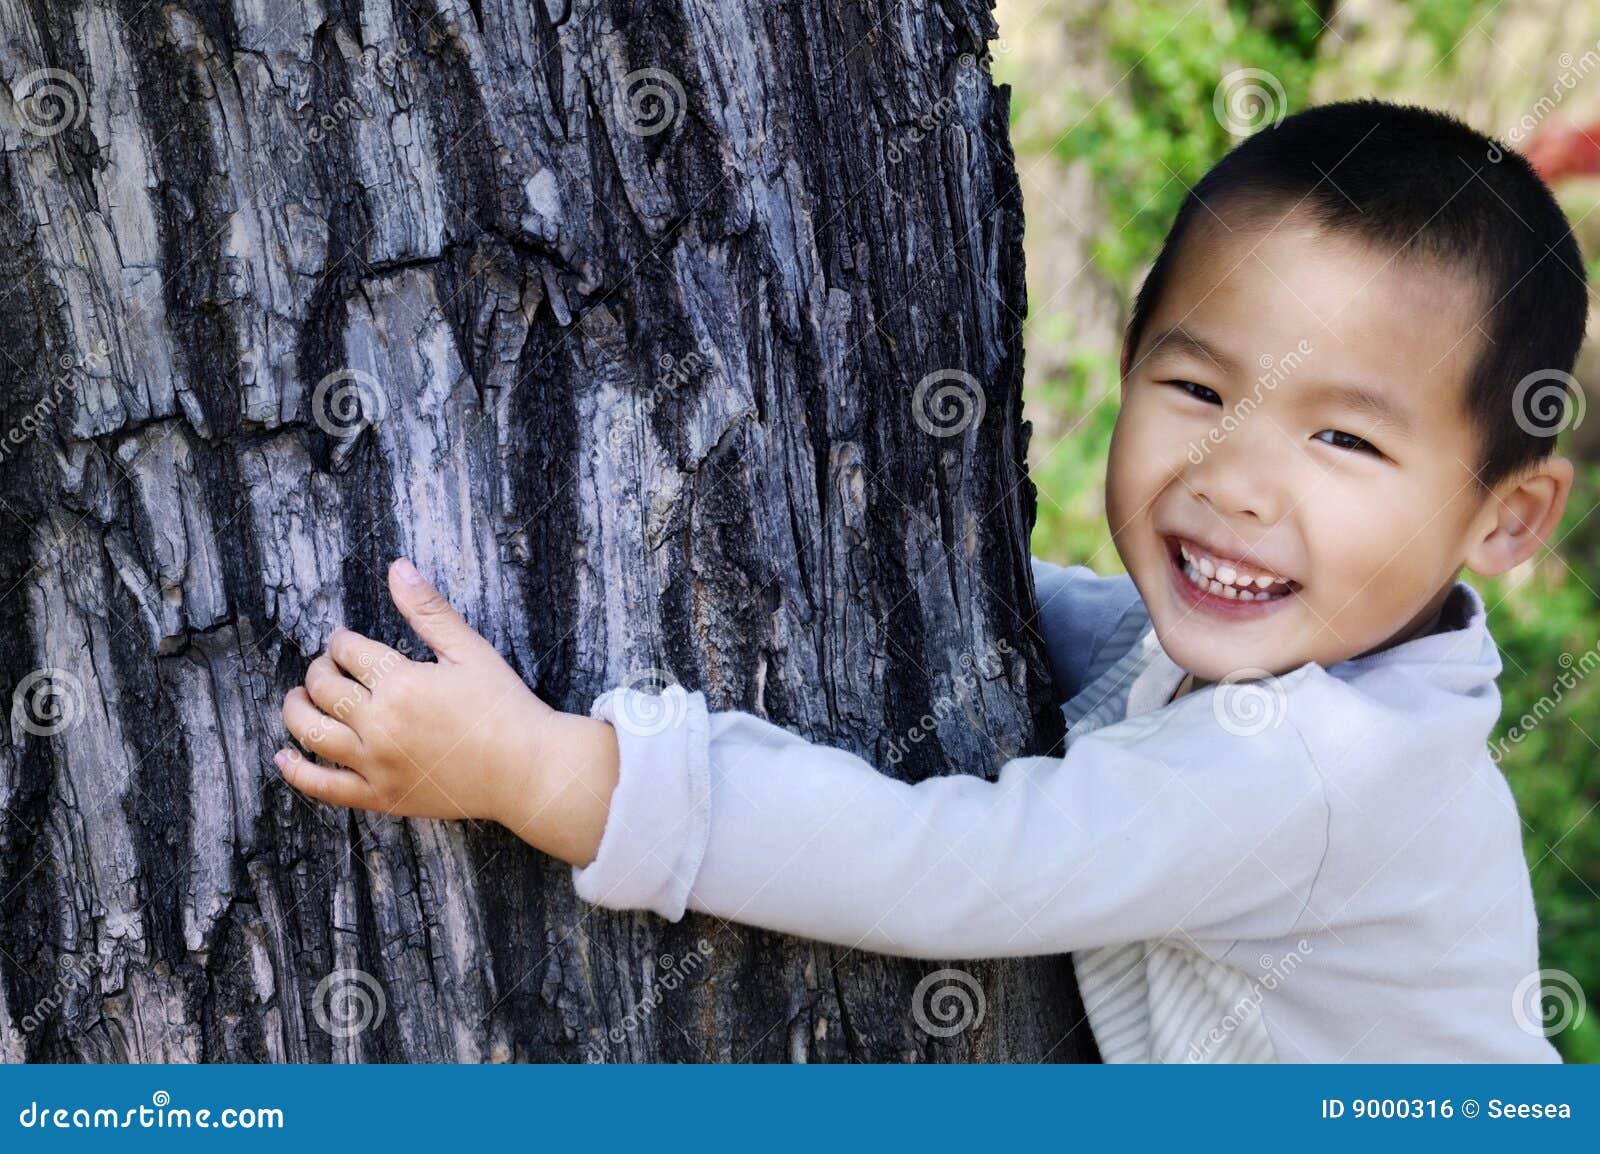 boy embrace tree bole